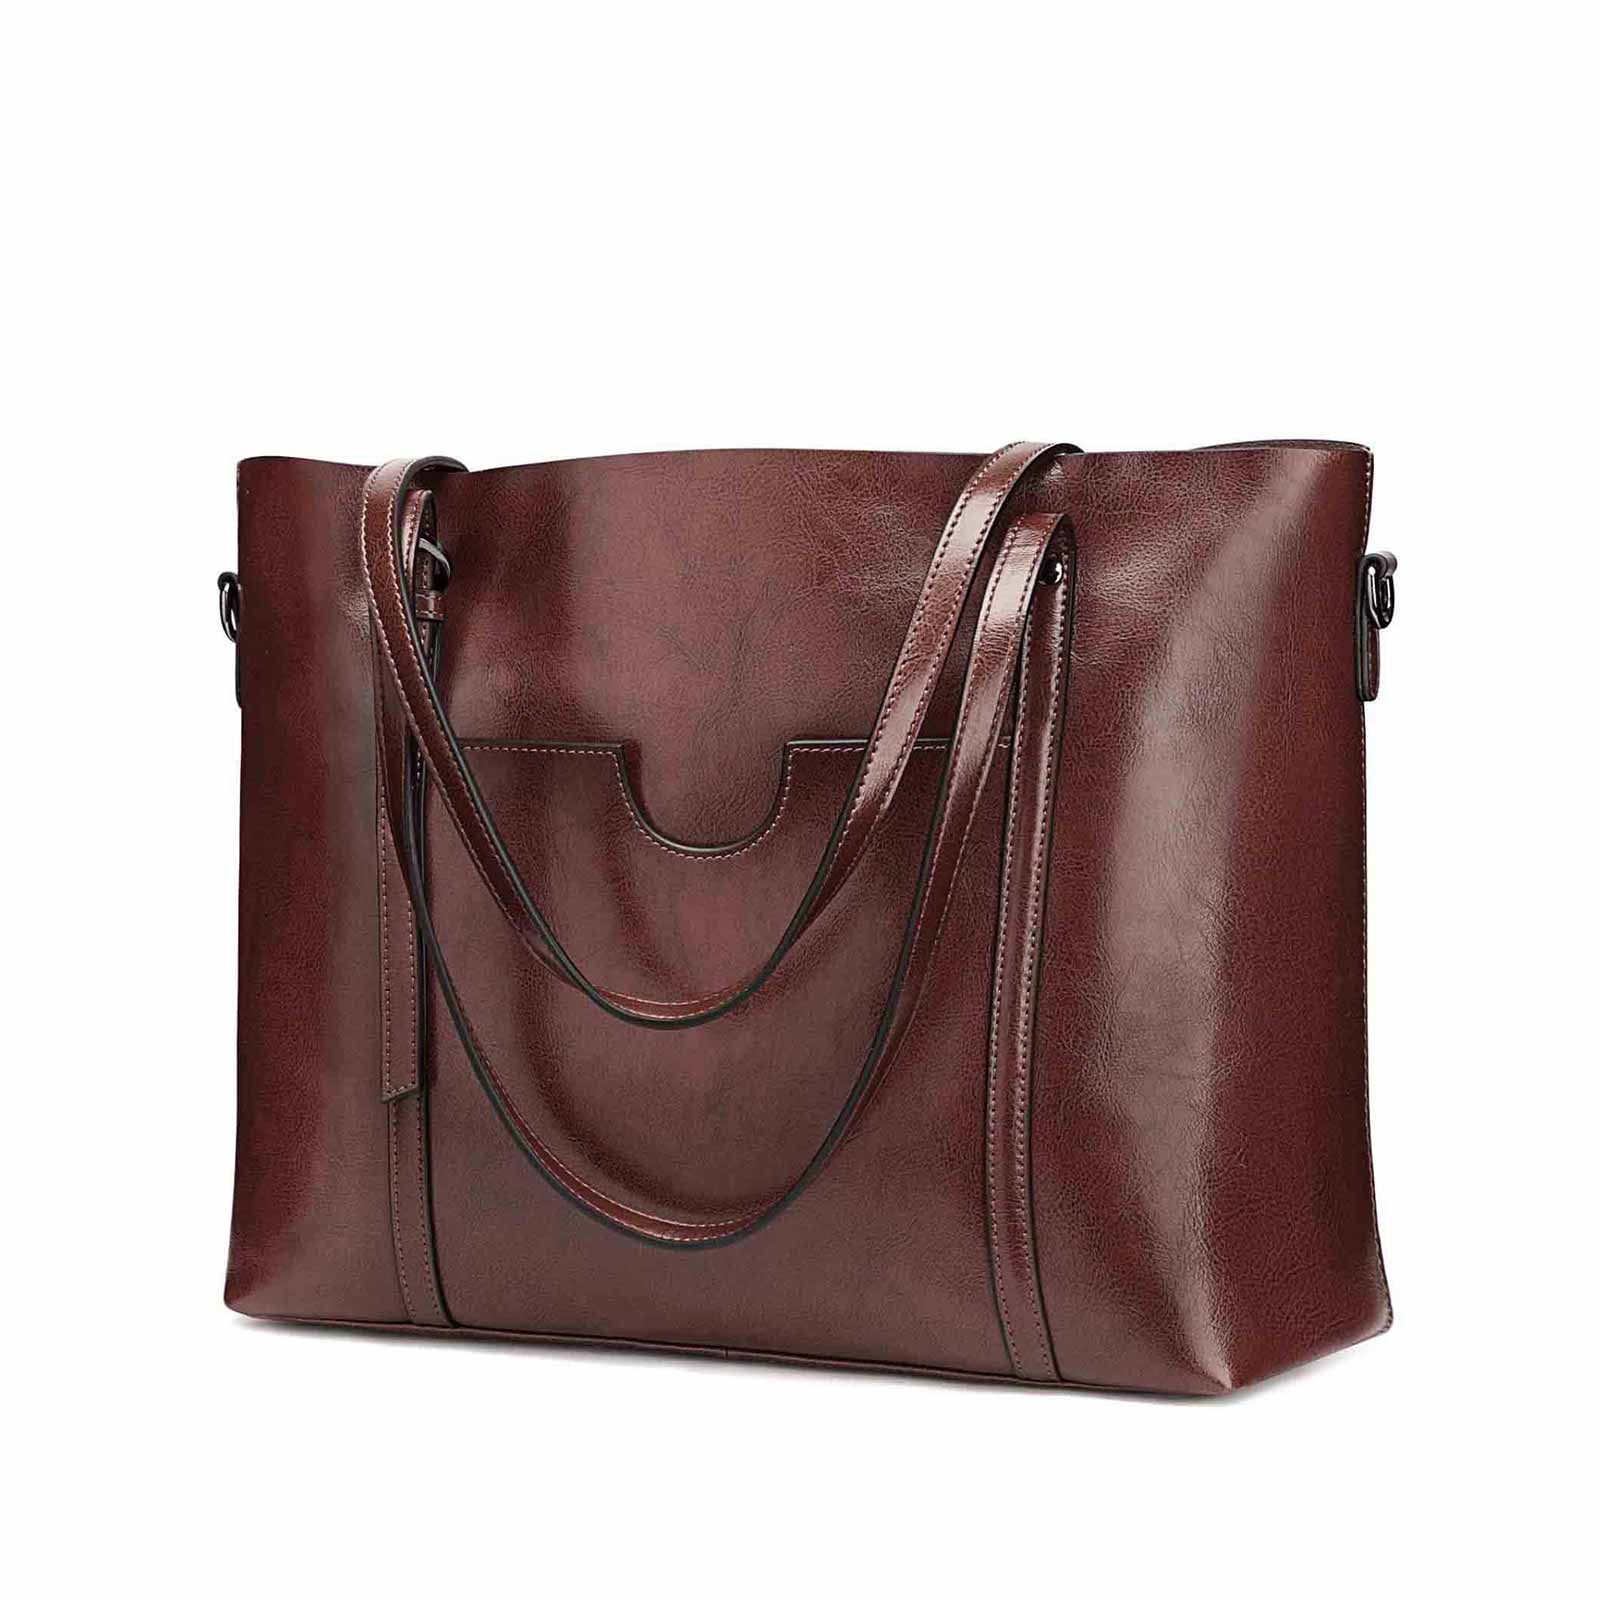 Christine Price Brown Leather Purse, Handbag, Shoulder Bag. Exc condition.